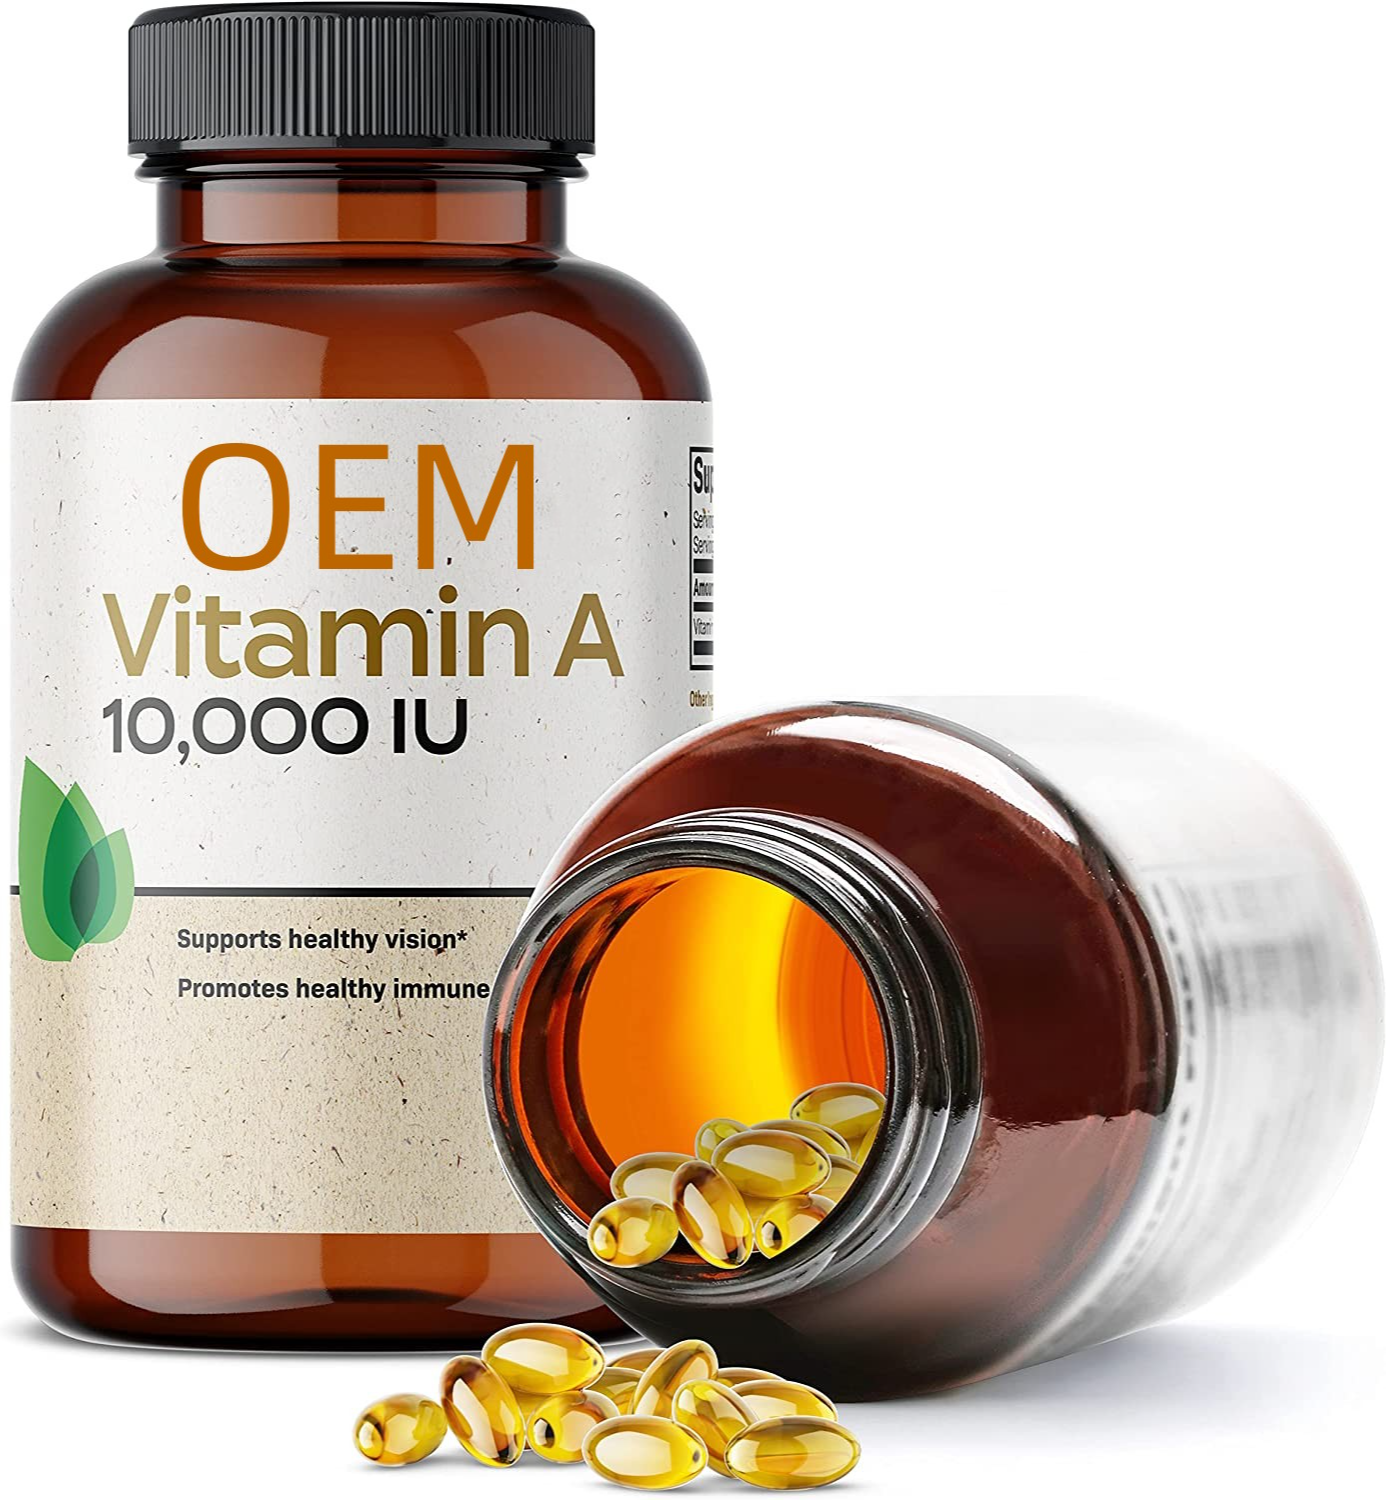 Customized Hot Selling Vitamin A Capsules 10,000 IU Premium Formula Healthy Vision & Immune Vitamin A Capsules